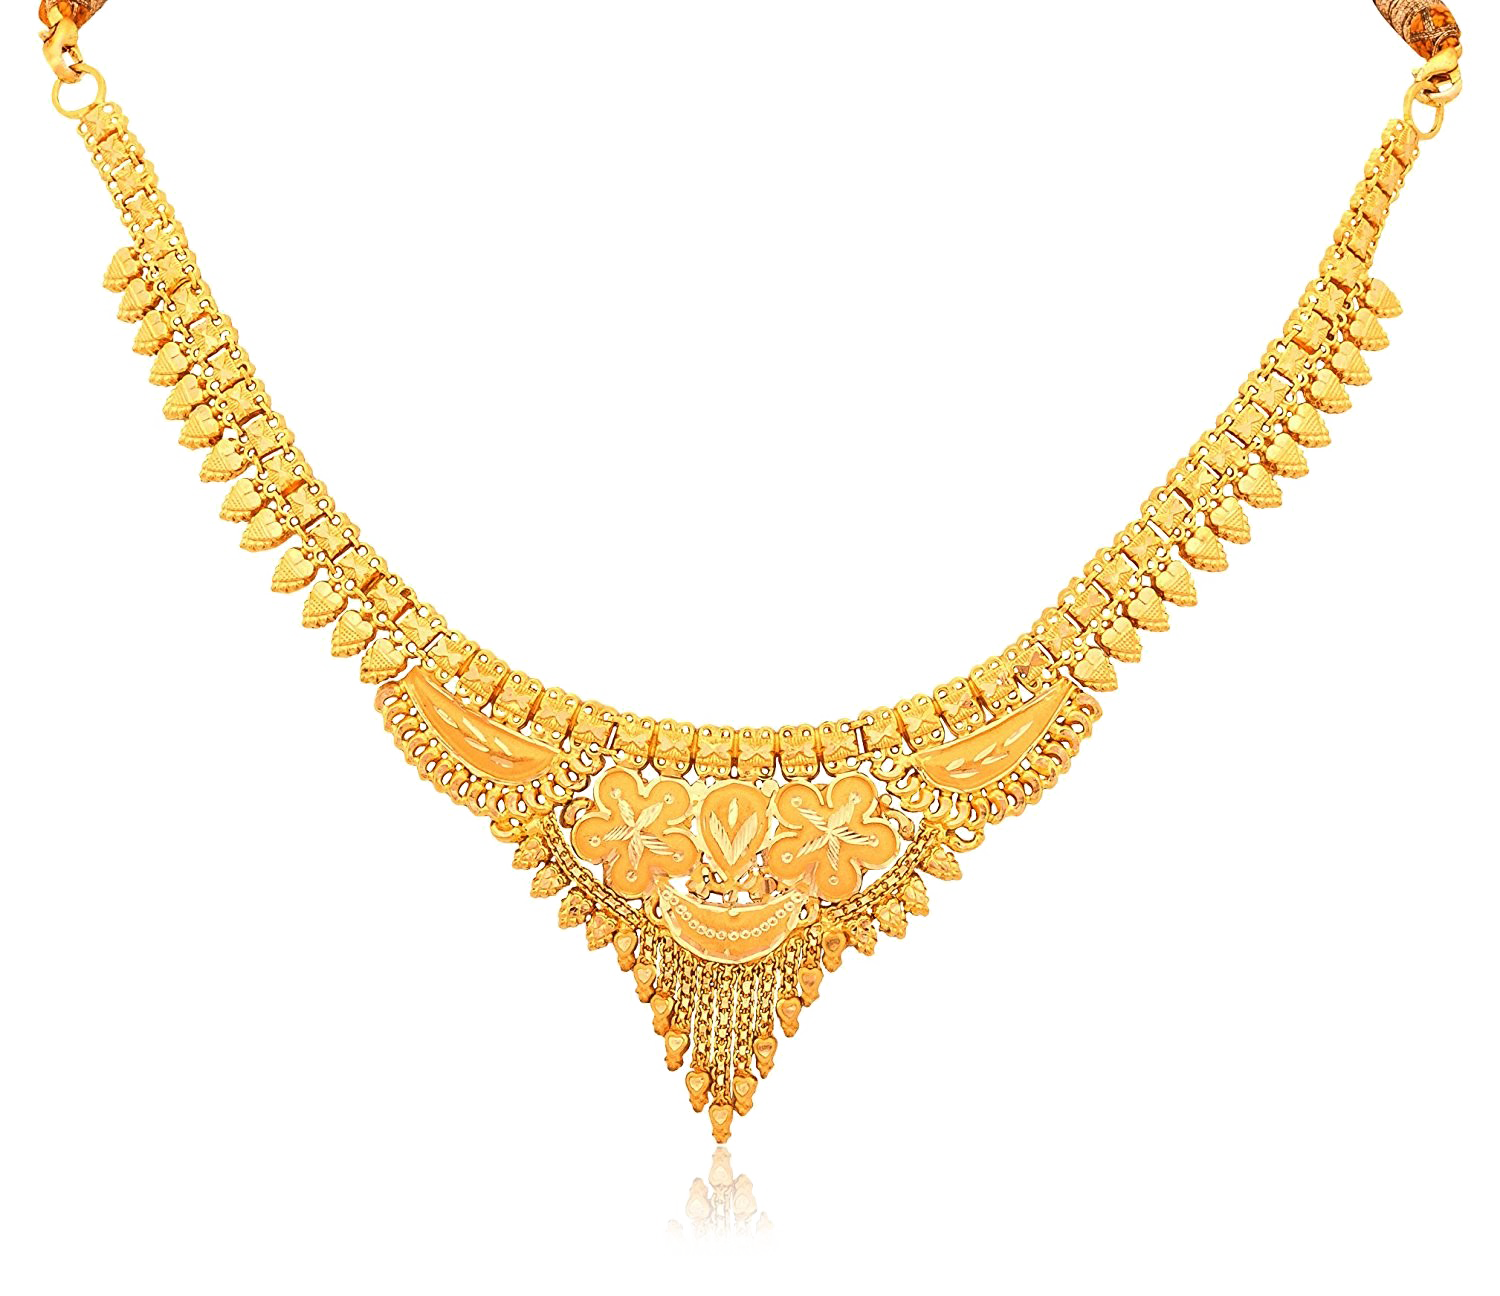 Gold Necklace Transparent PNG SVG Clip arts download - Download Clip ...